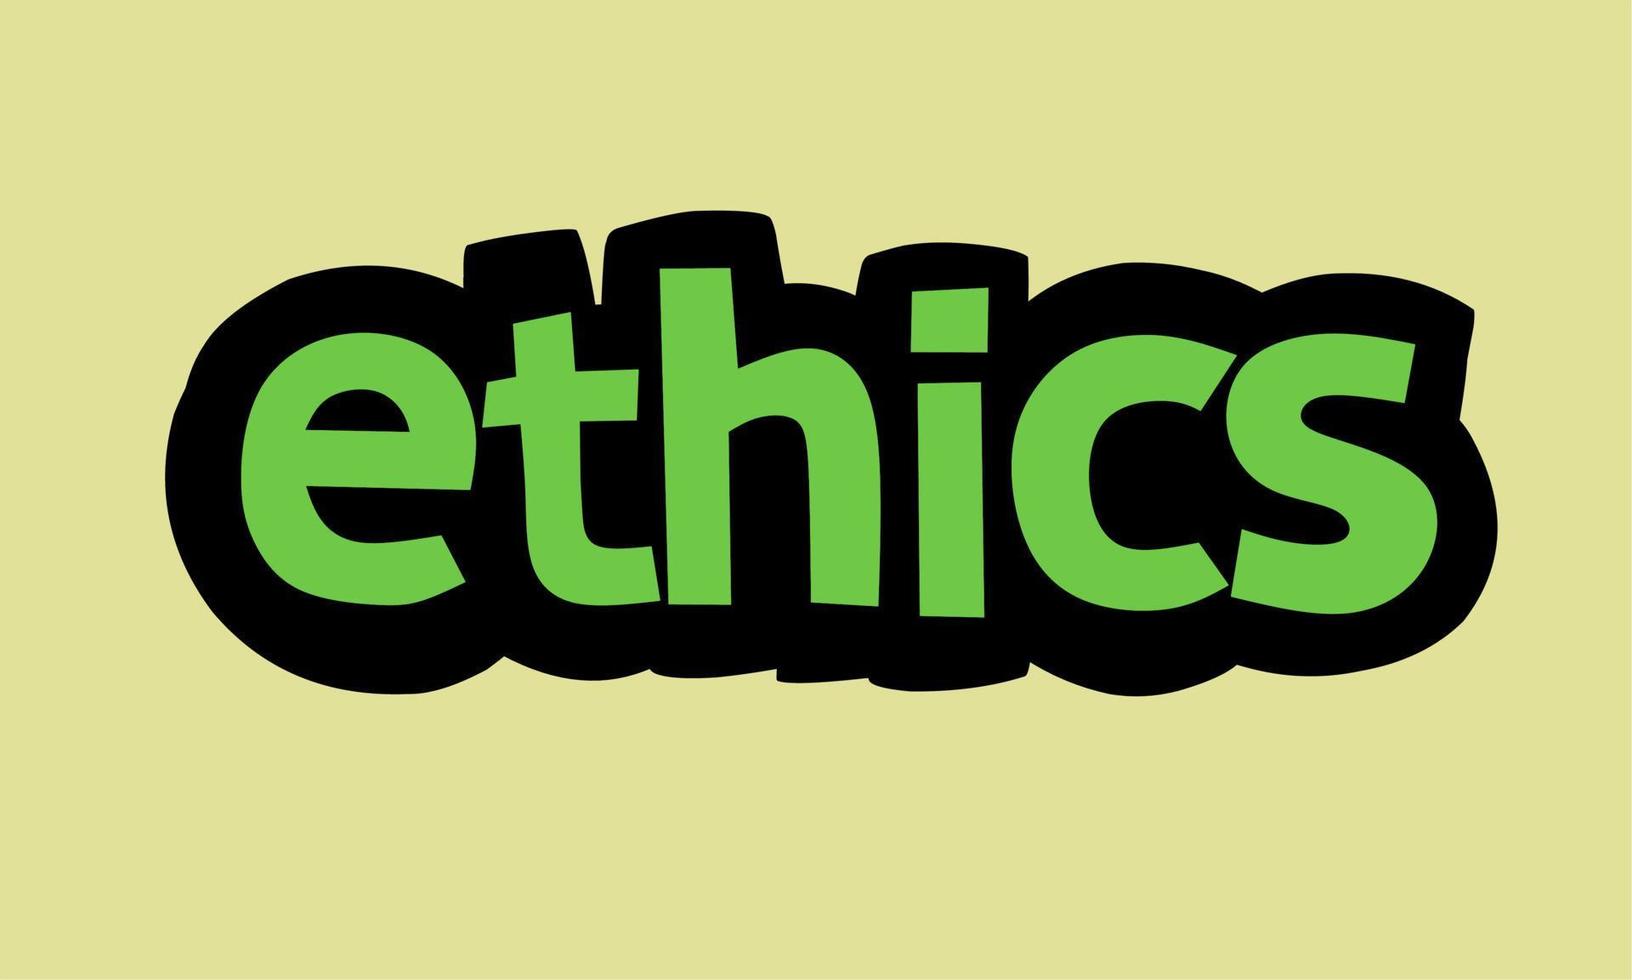 etik skriva vektordesign på gul bakgrund vektor